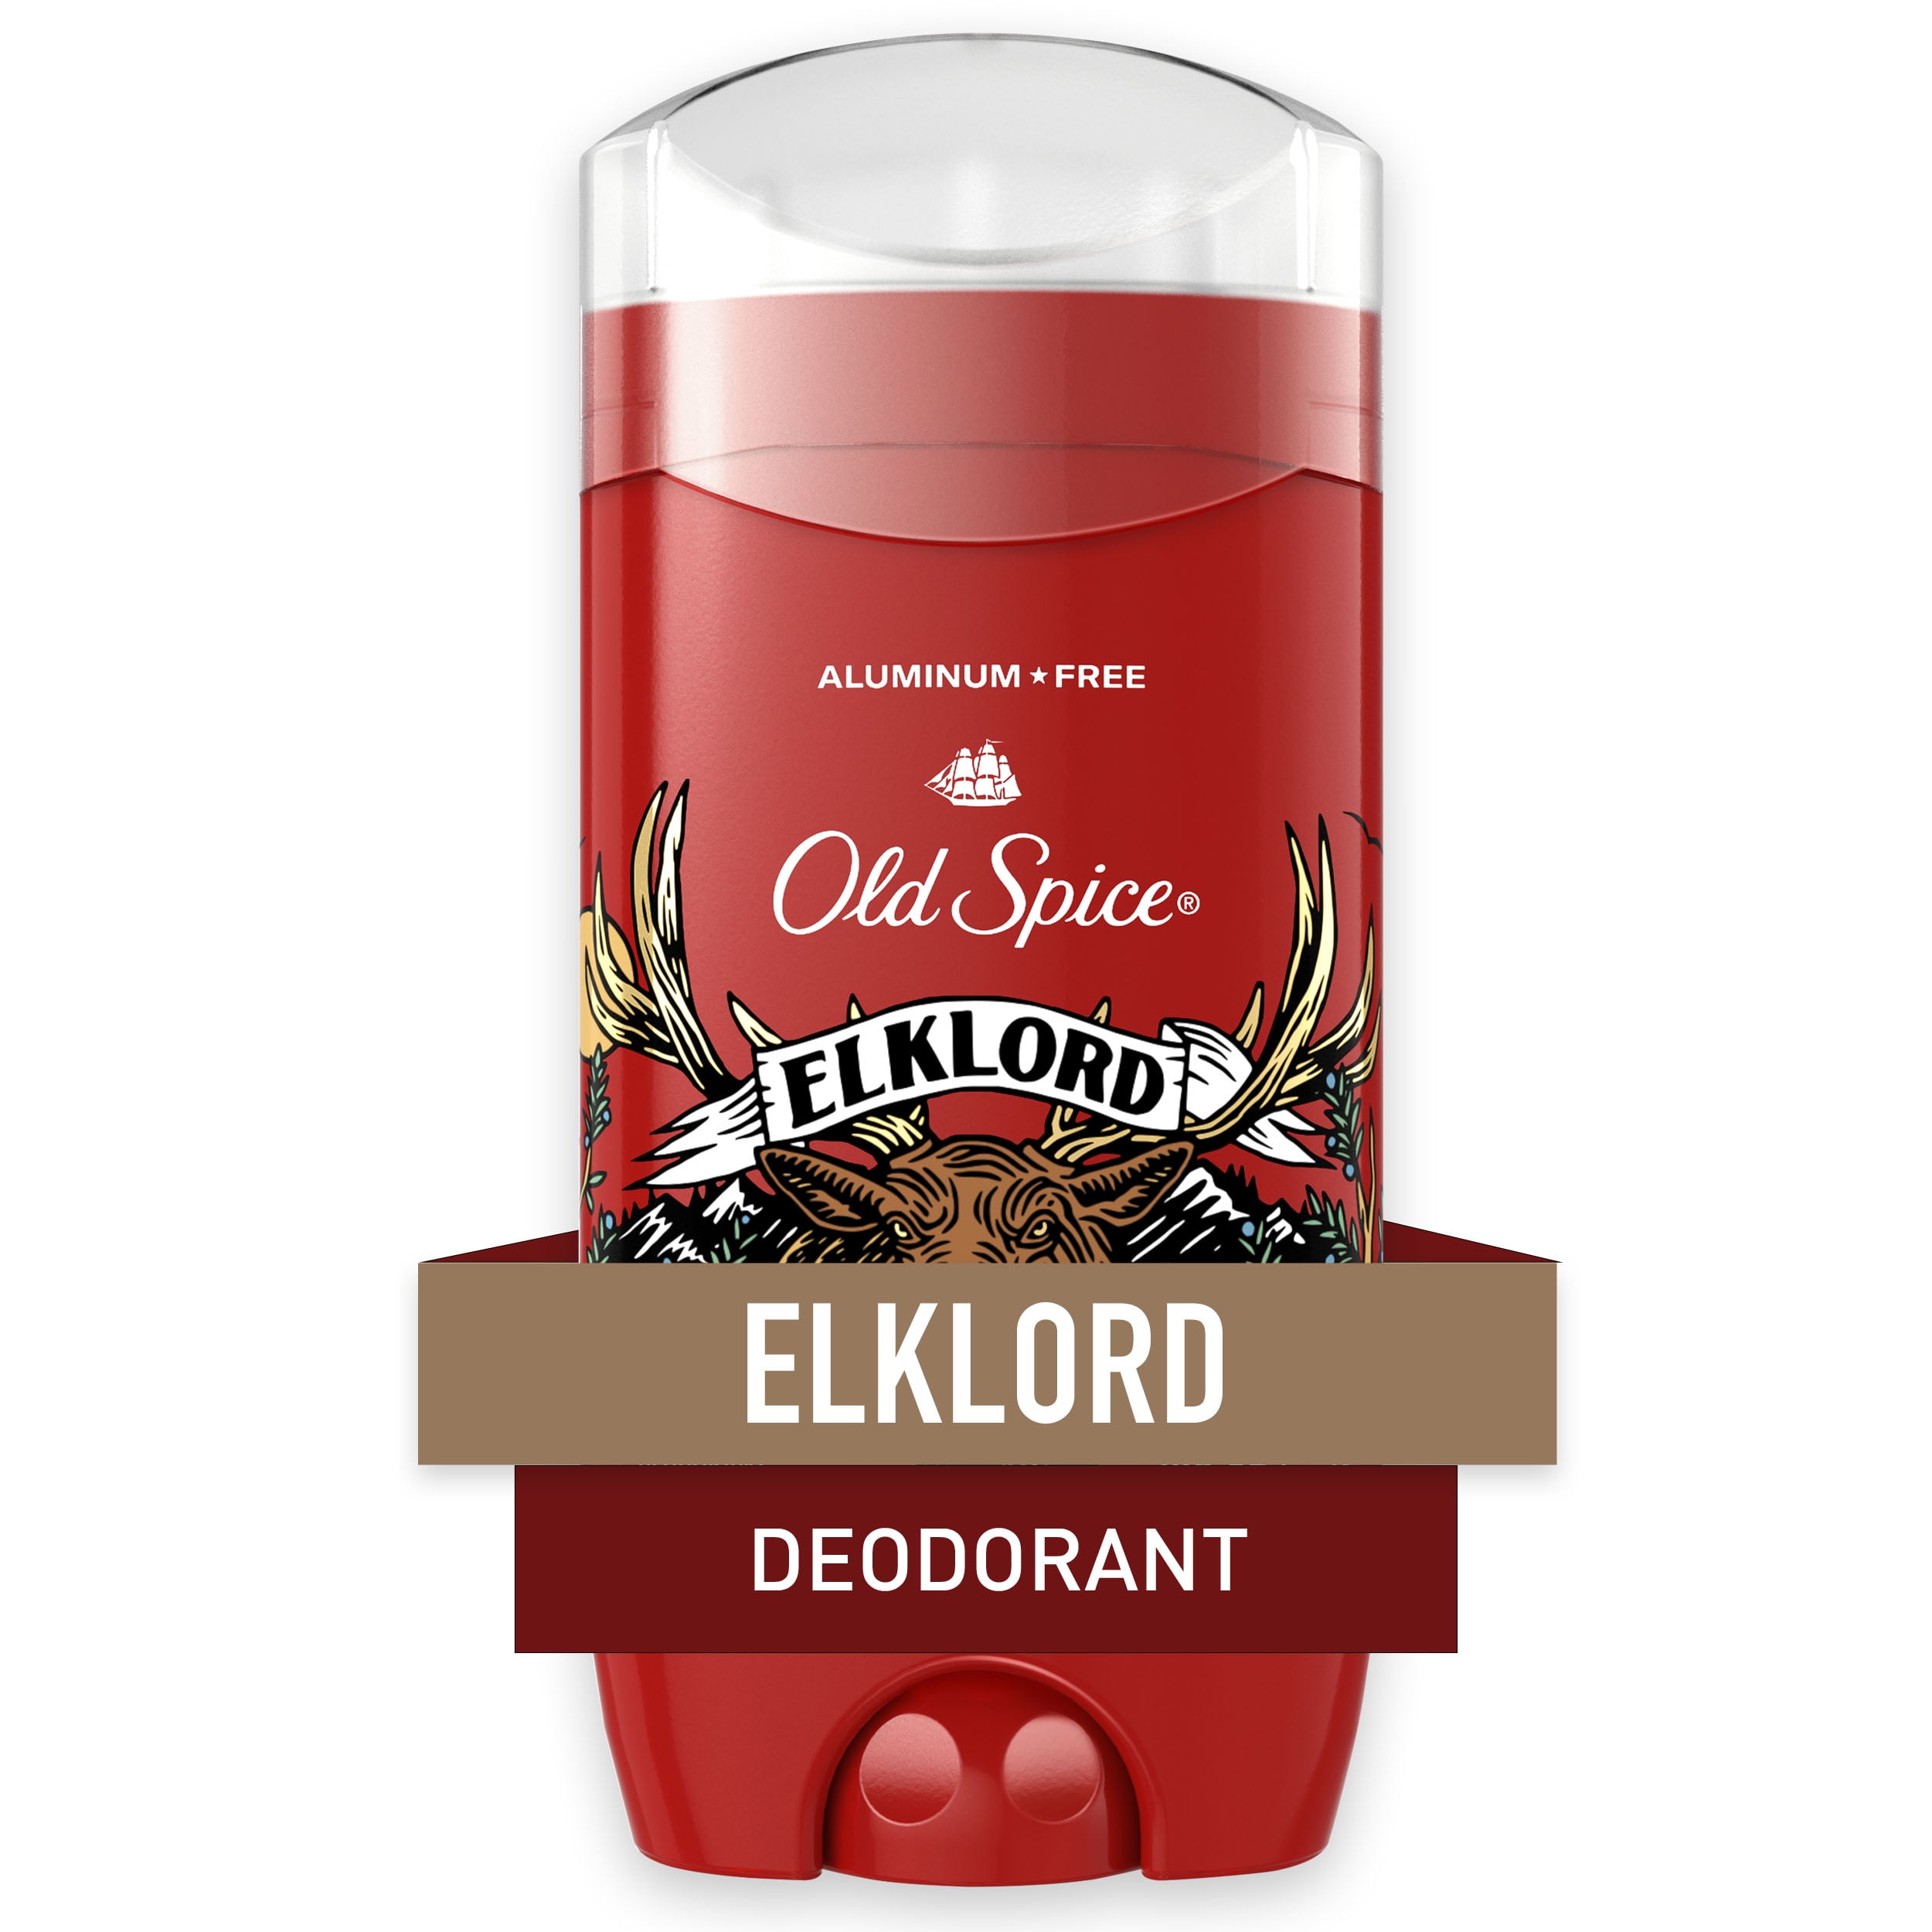 Old Spice Deodorant for Men, Aluminum Free, ElkLord, 3.0 oz